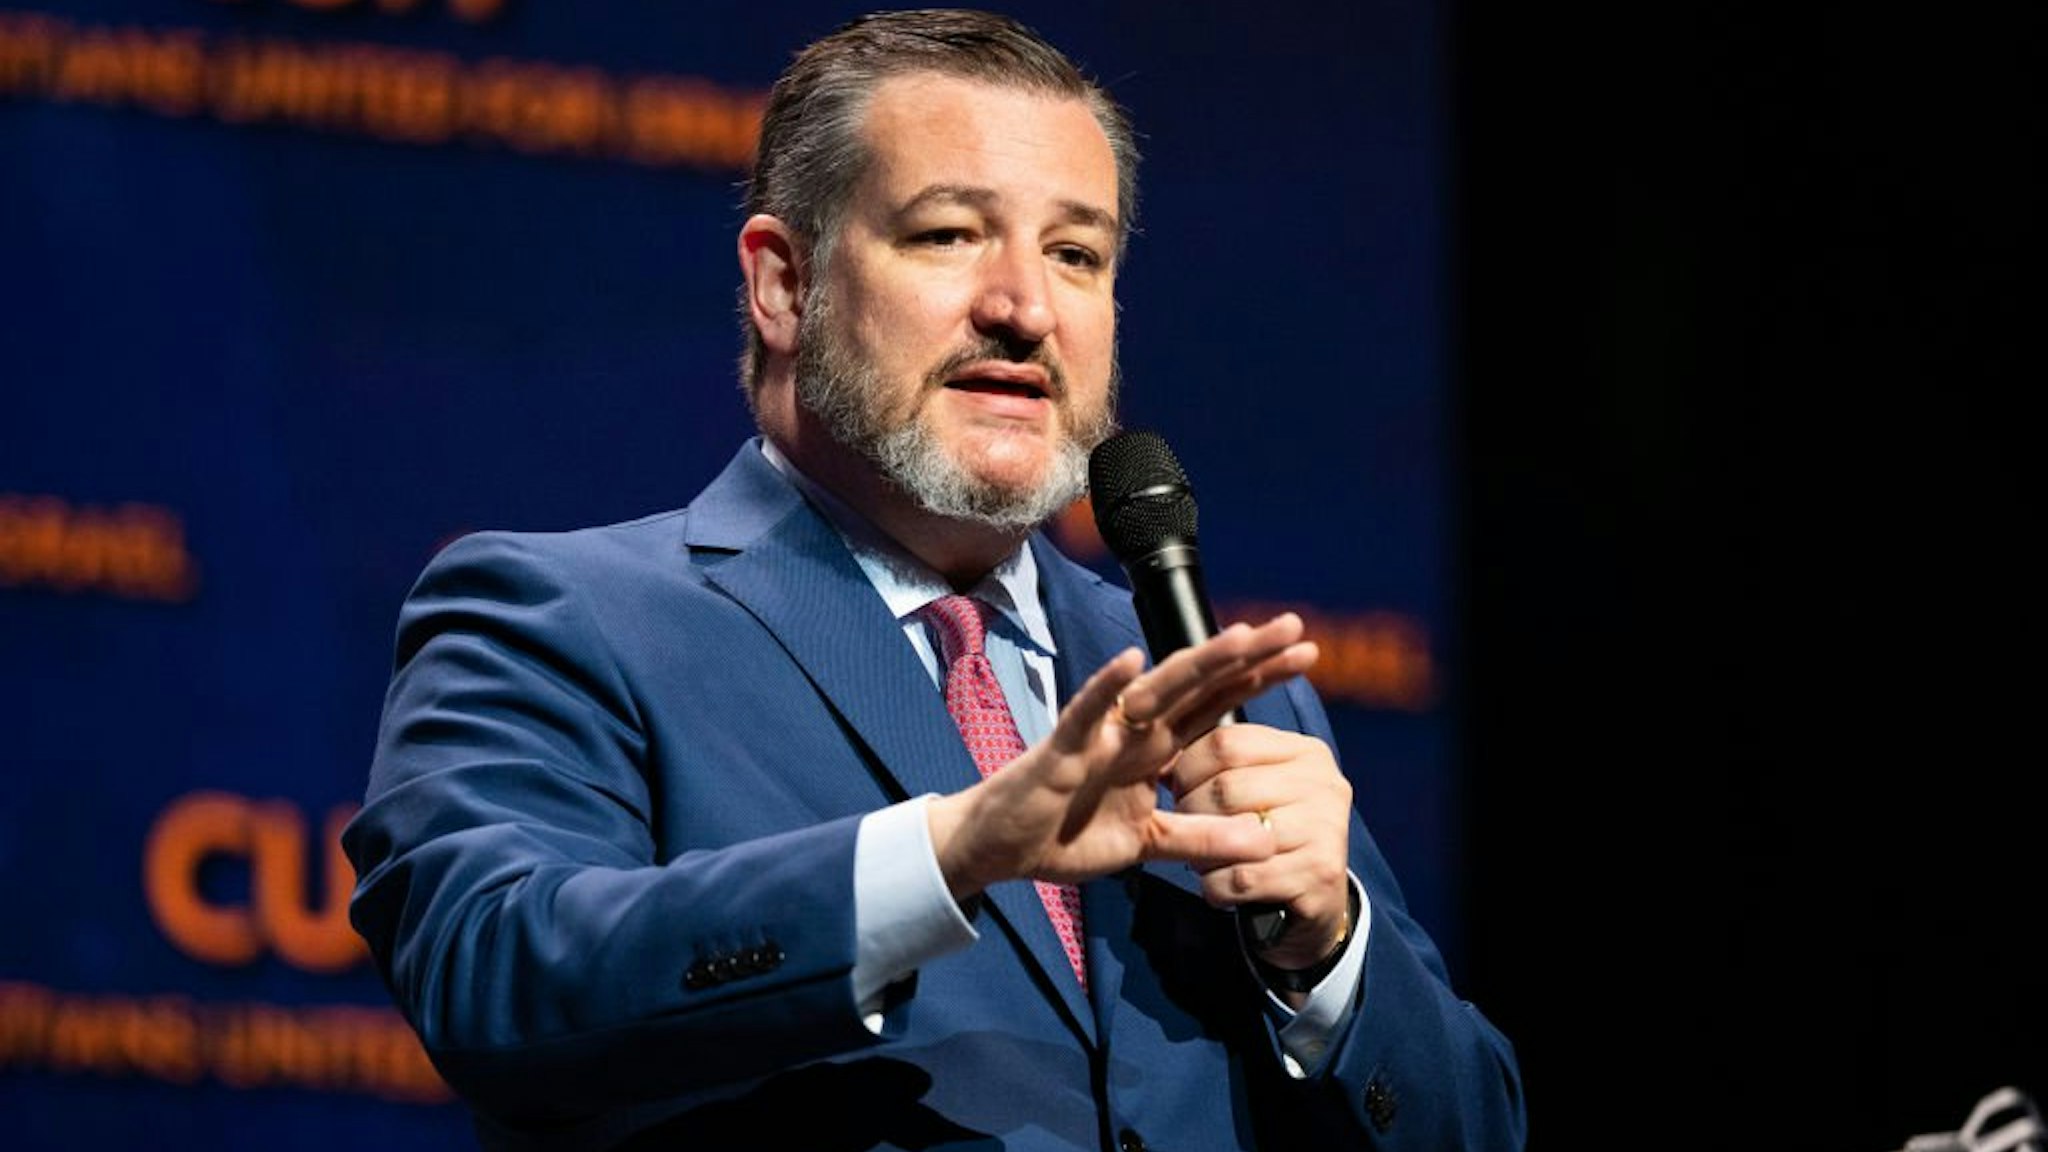 Senator Ted Cruz (R-TX) speaking at the Christians United for Israel (CUFI) Washington Summit